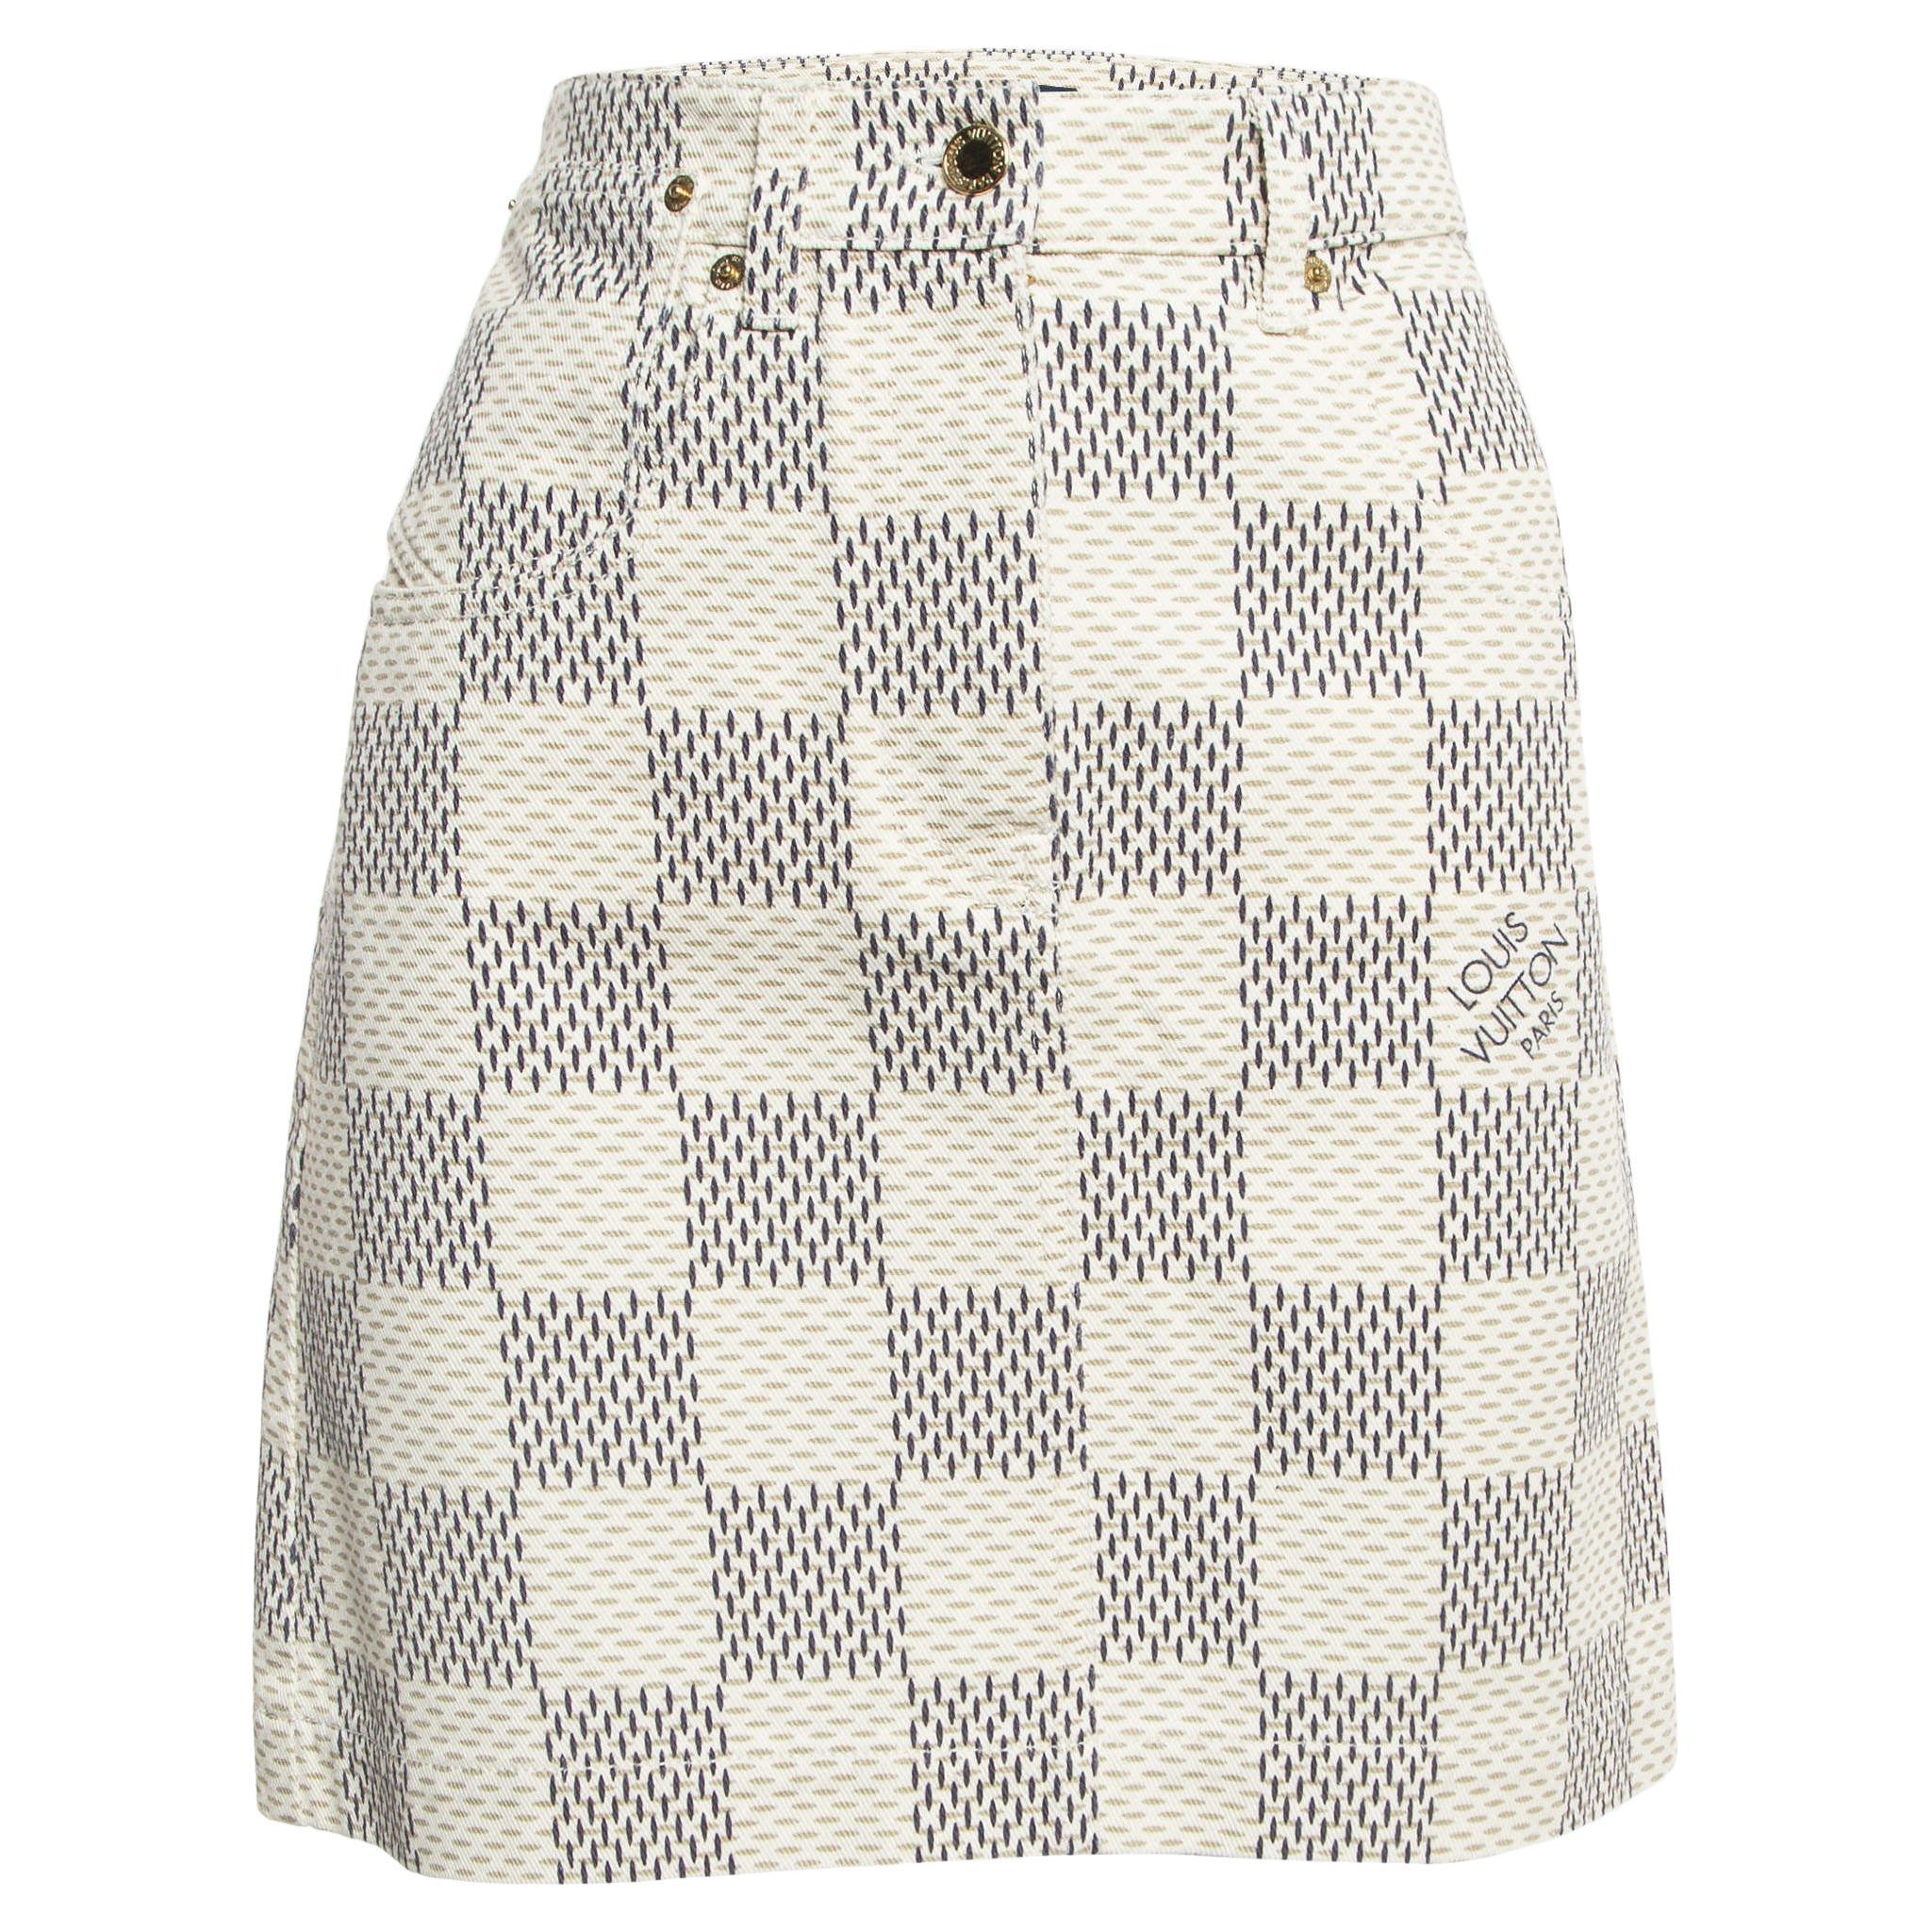 Louis Vuitton Cream Damier Azur Print Denim Mini Skirt M